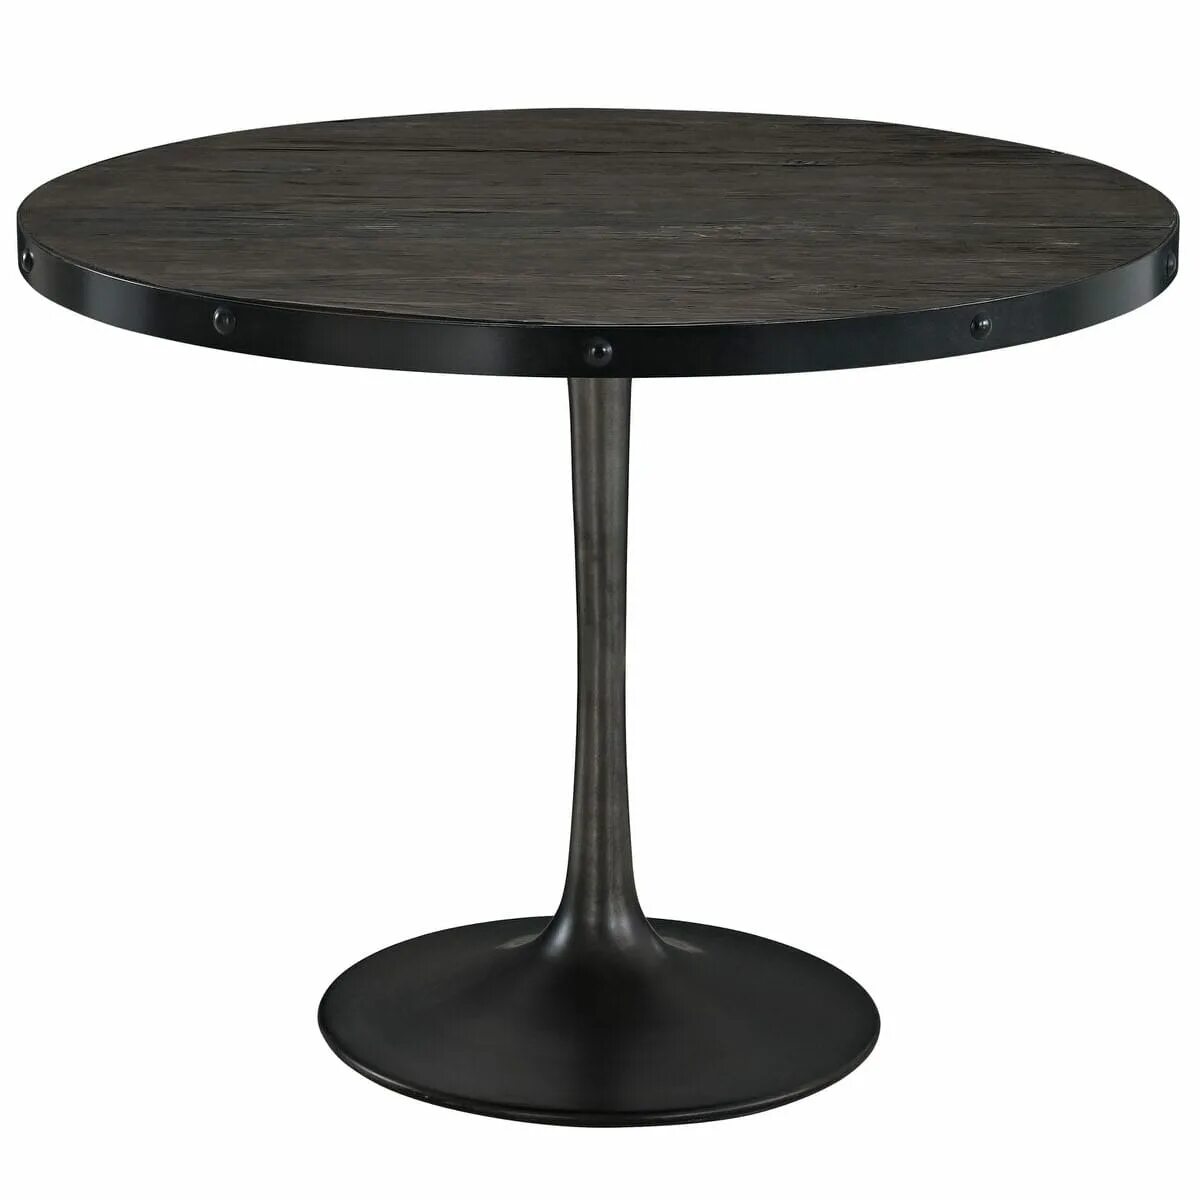 Стол круглый челябинск. Стол Empire n 160 черный. Круглый стол. Столик круглый. Круглый деревянный стол.